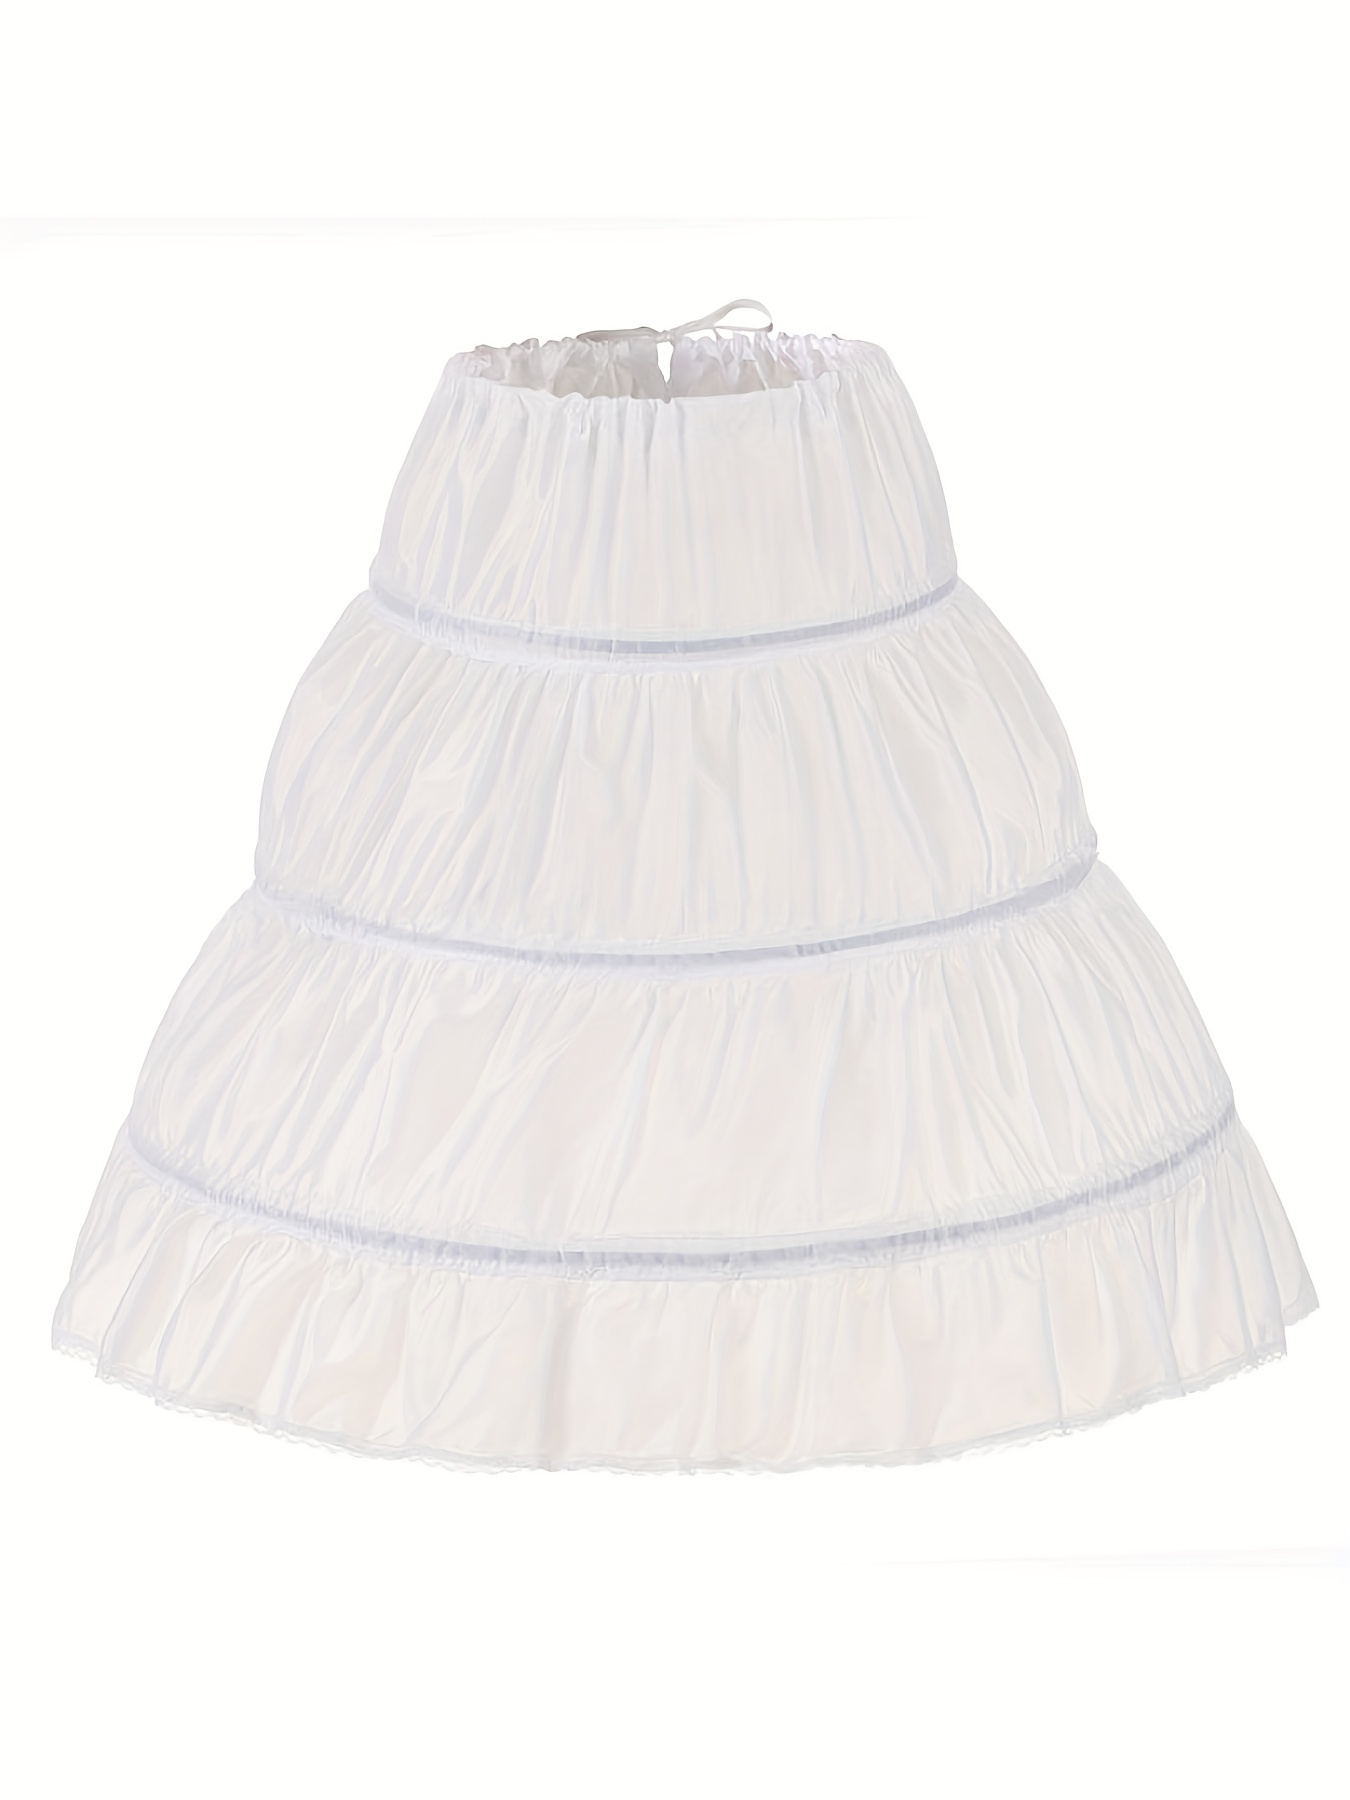 BBSET Women Crinoline Petticoat A-line 6 Hoop Skirt Slips India